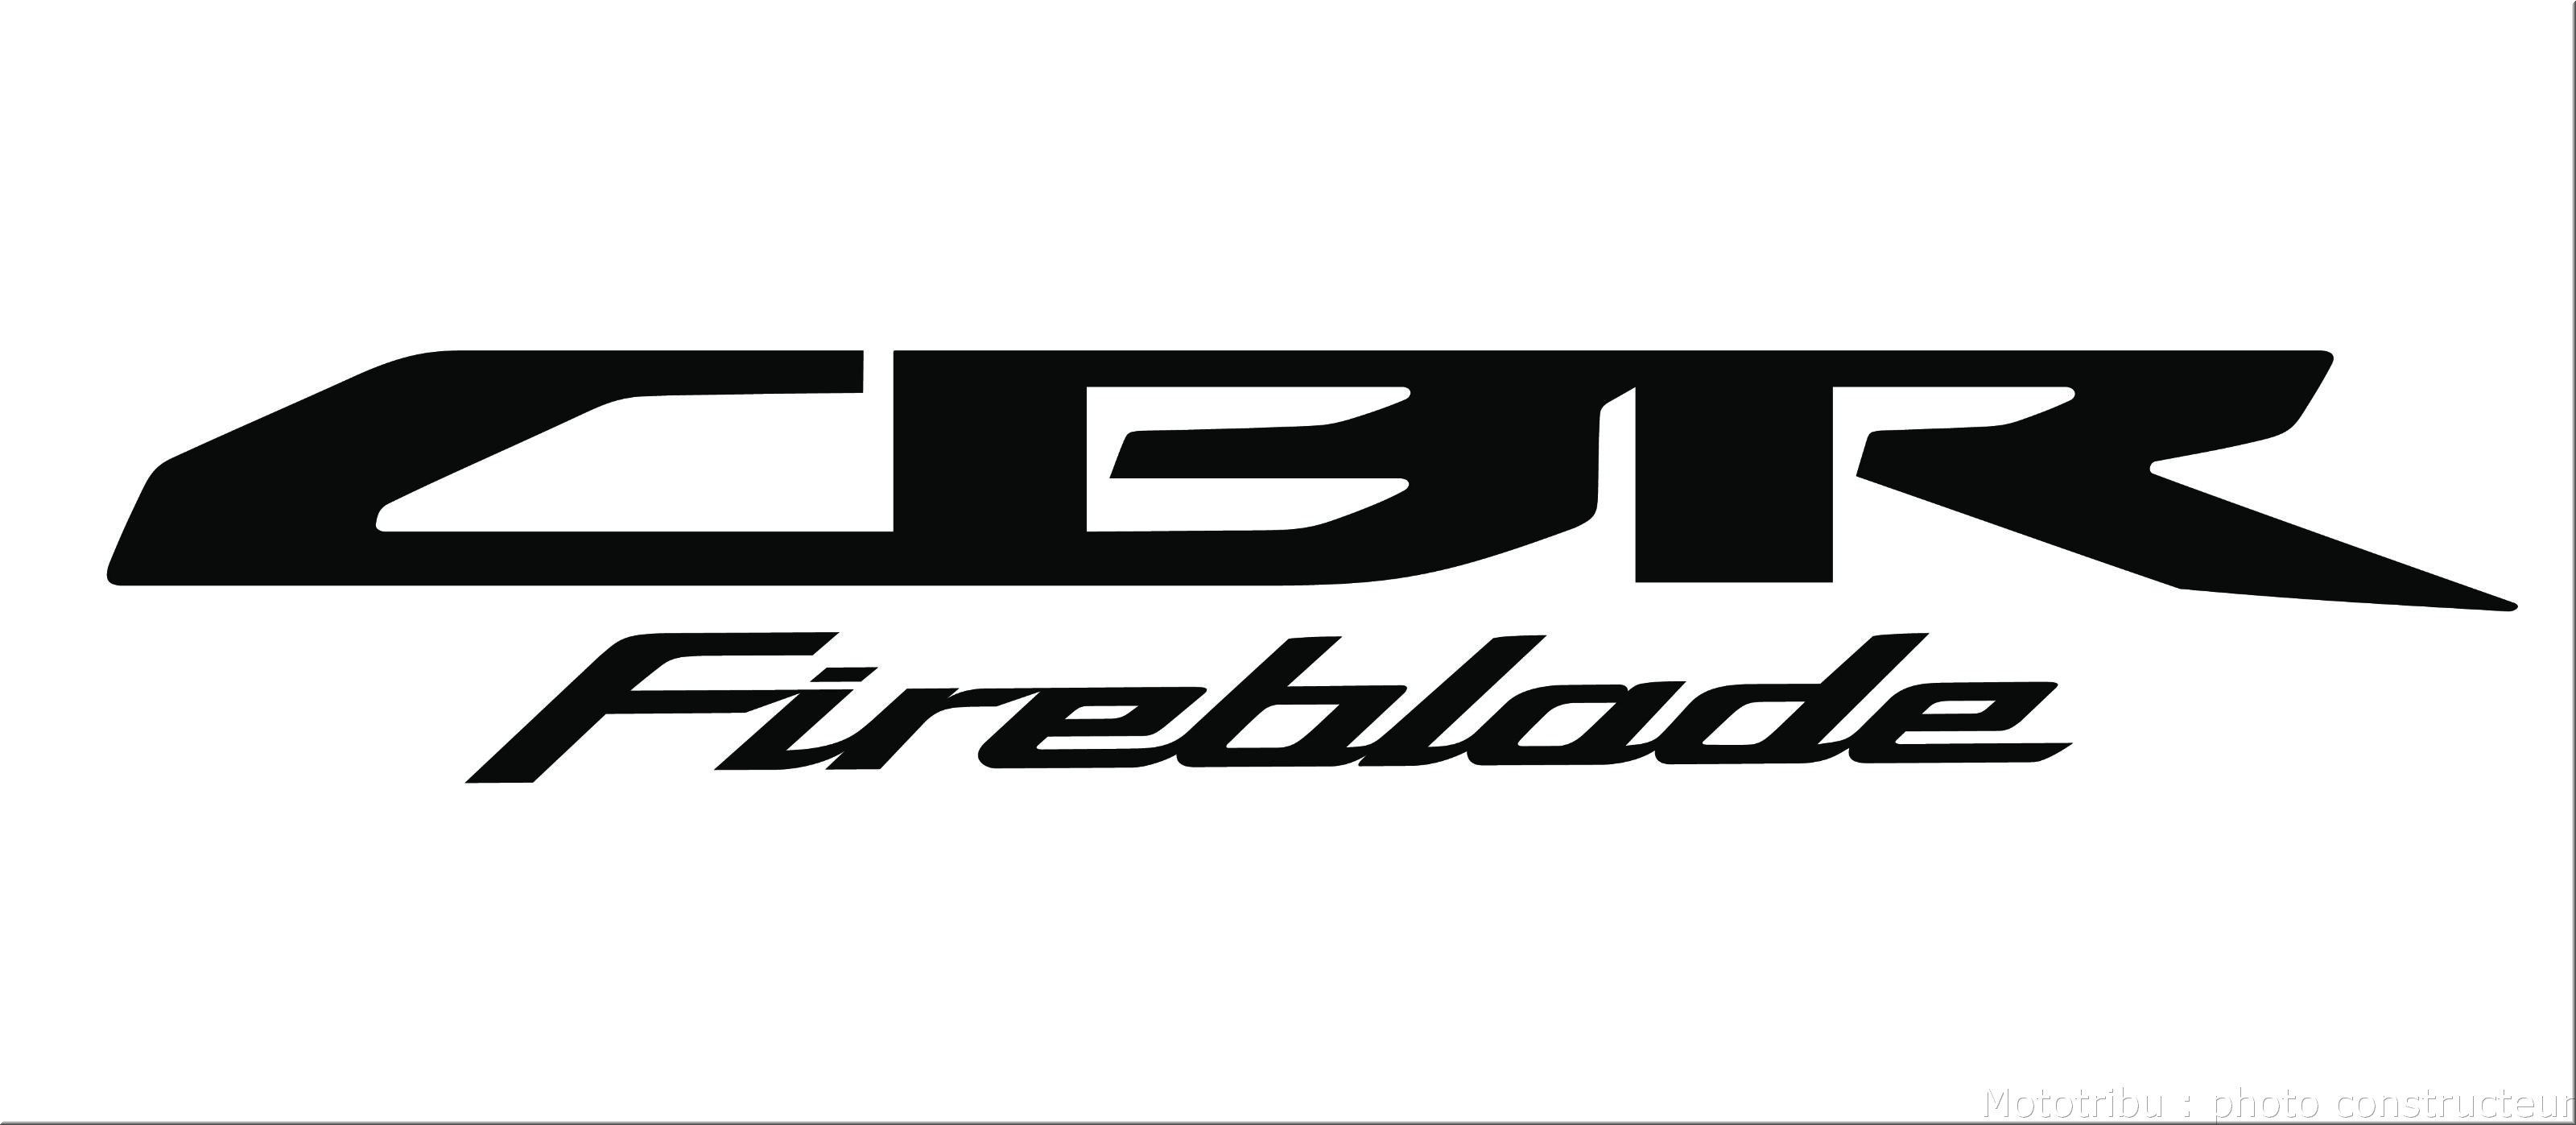 Premium Vector | Cbr racing logo